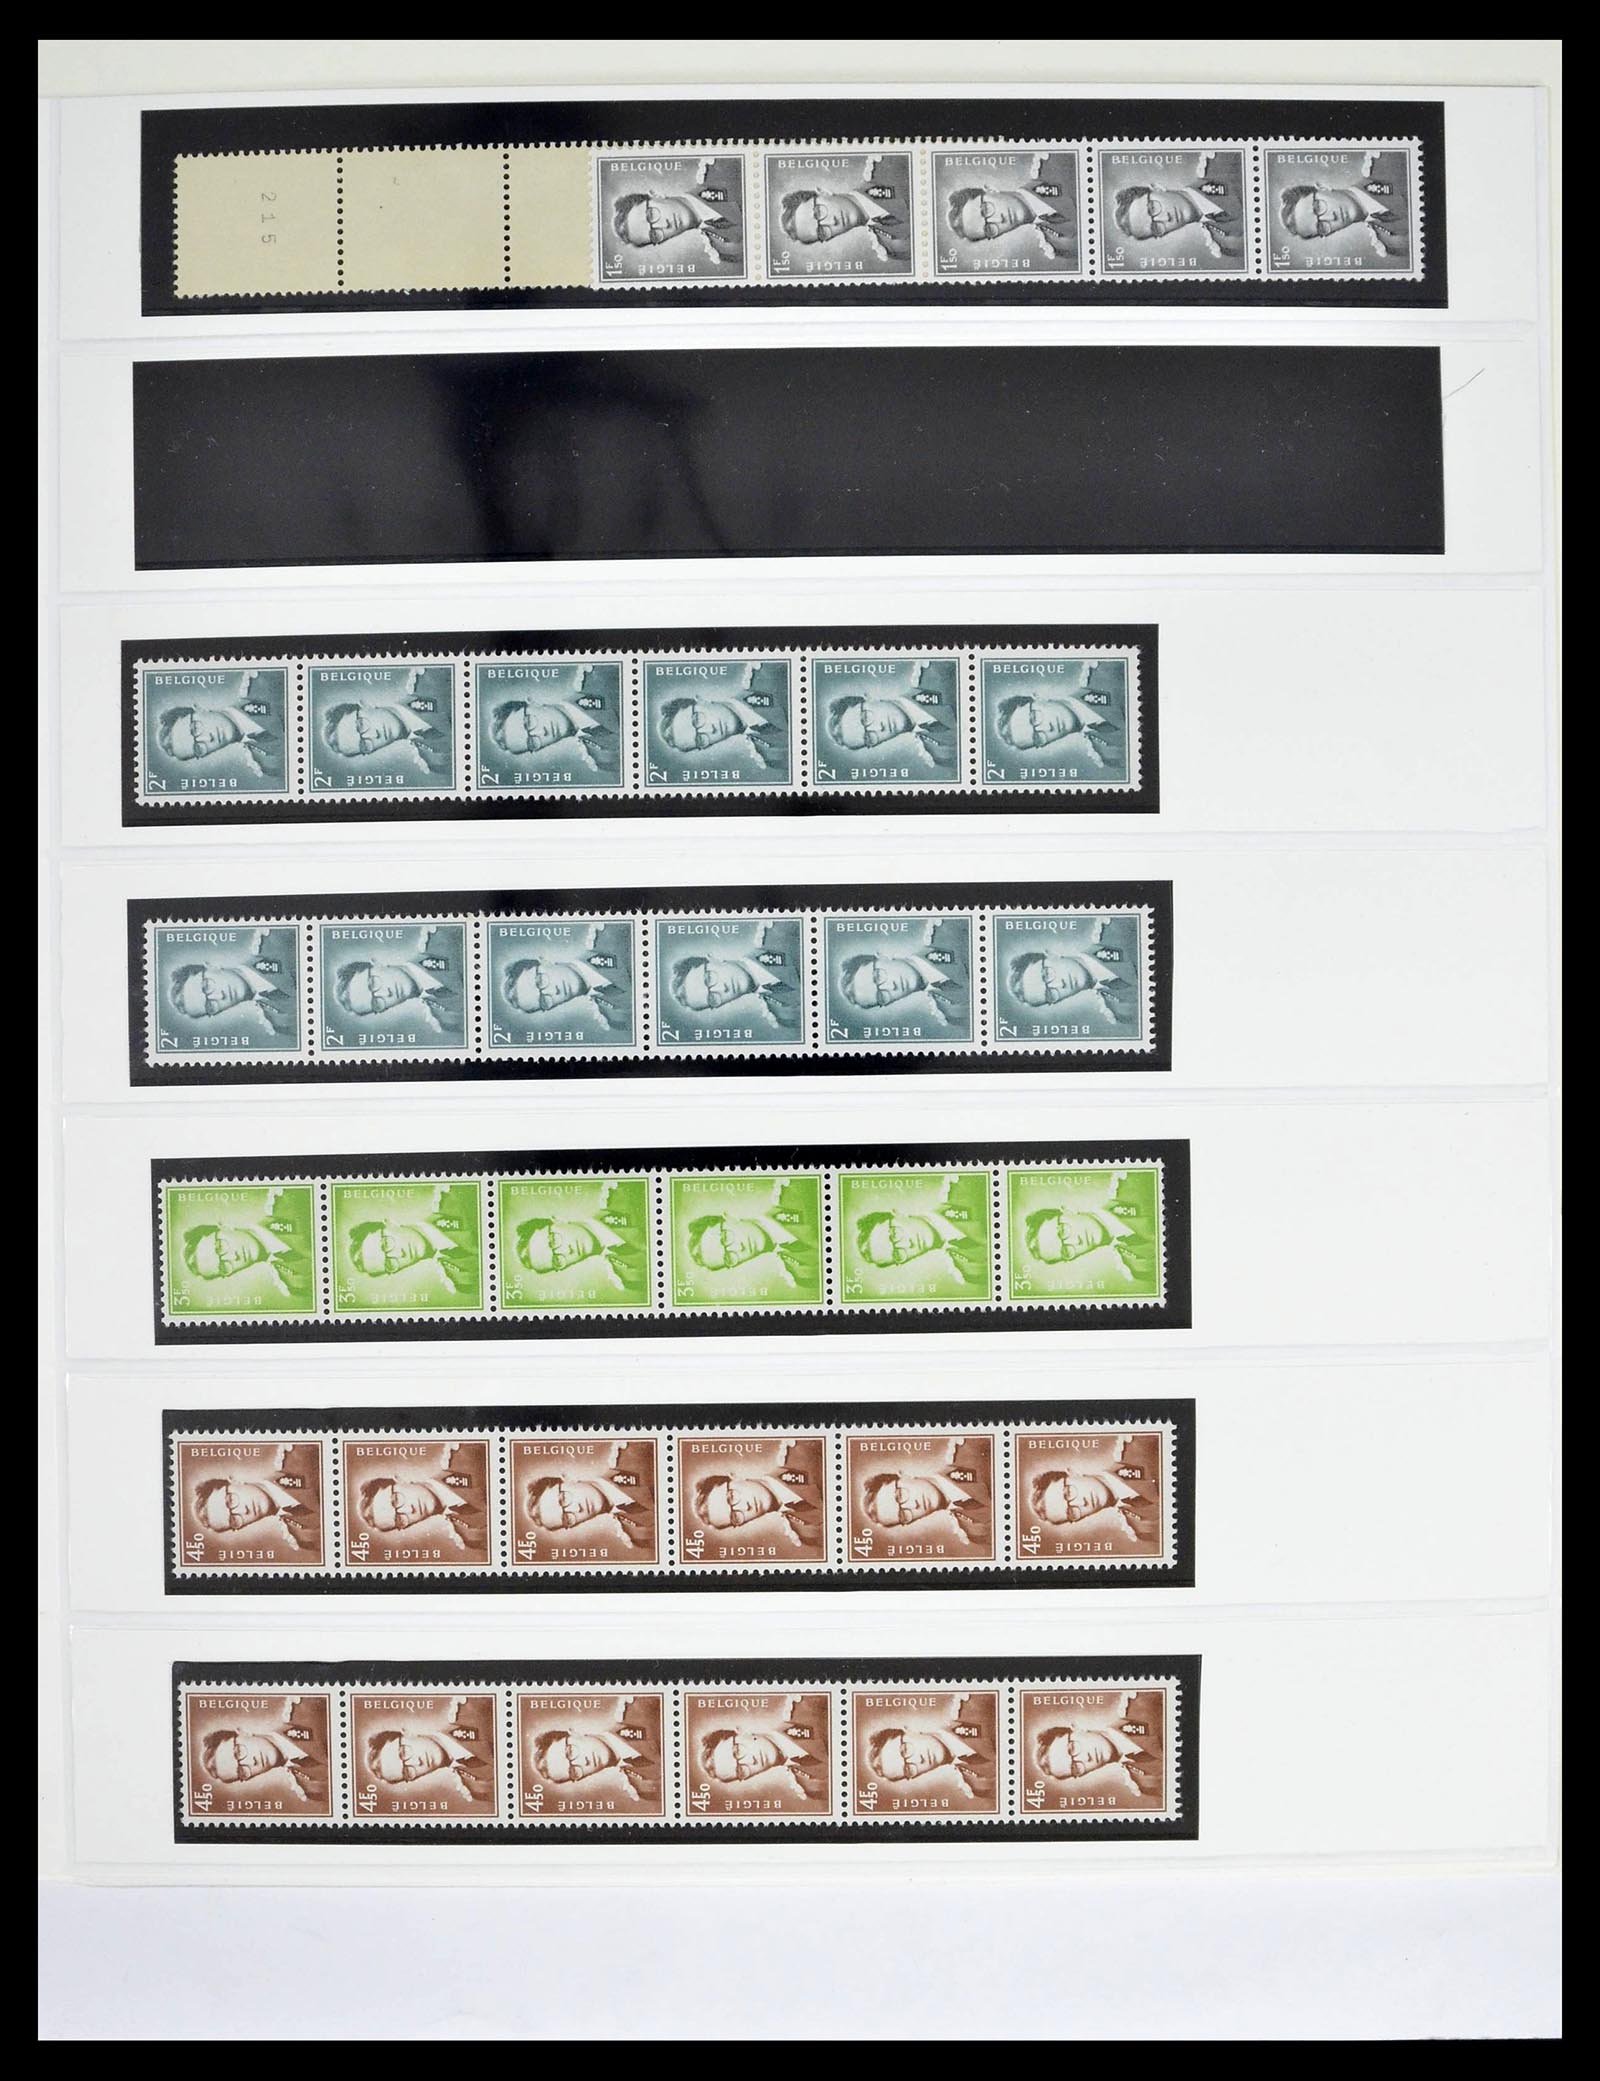 39229 0033 - Stamp collection 39229 Belgium Boudewijn with glasses 1952-1975.